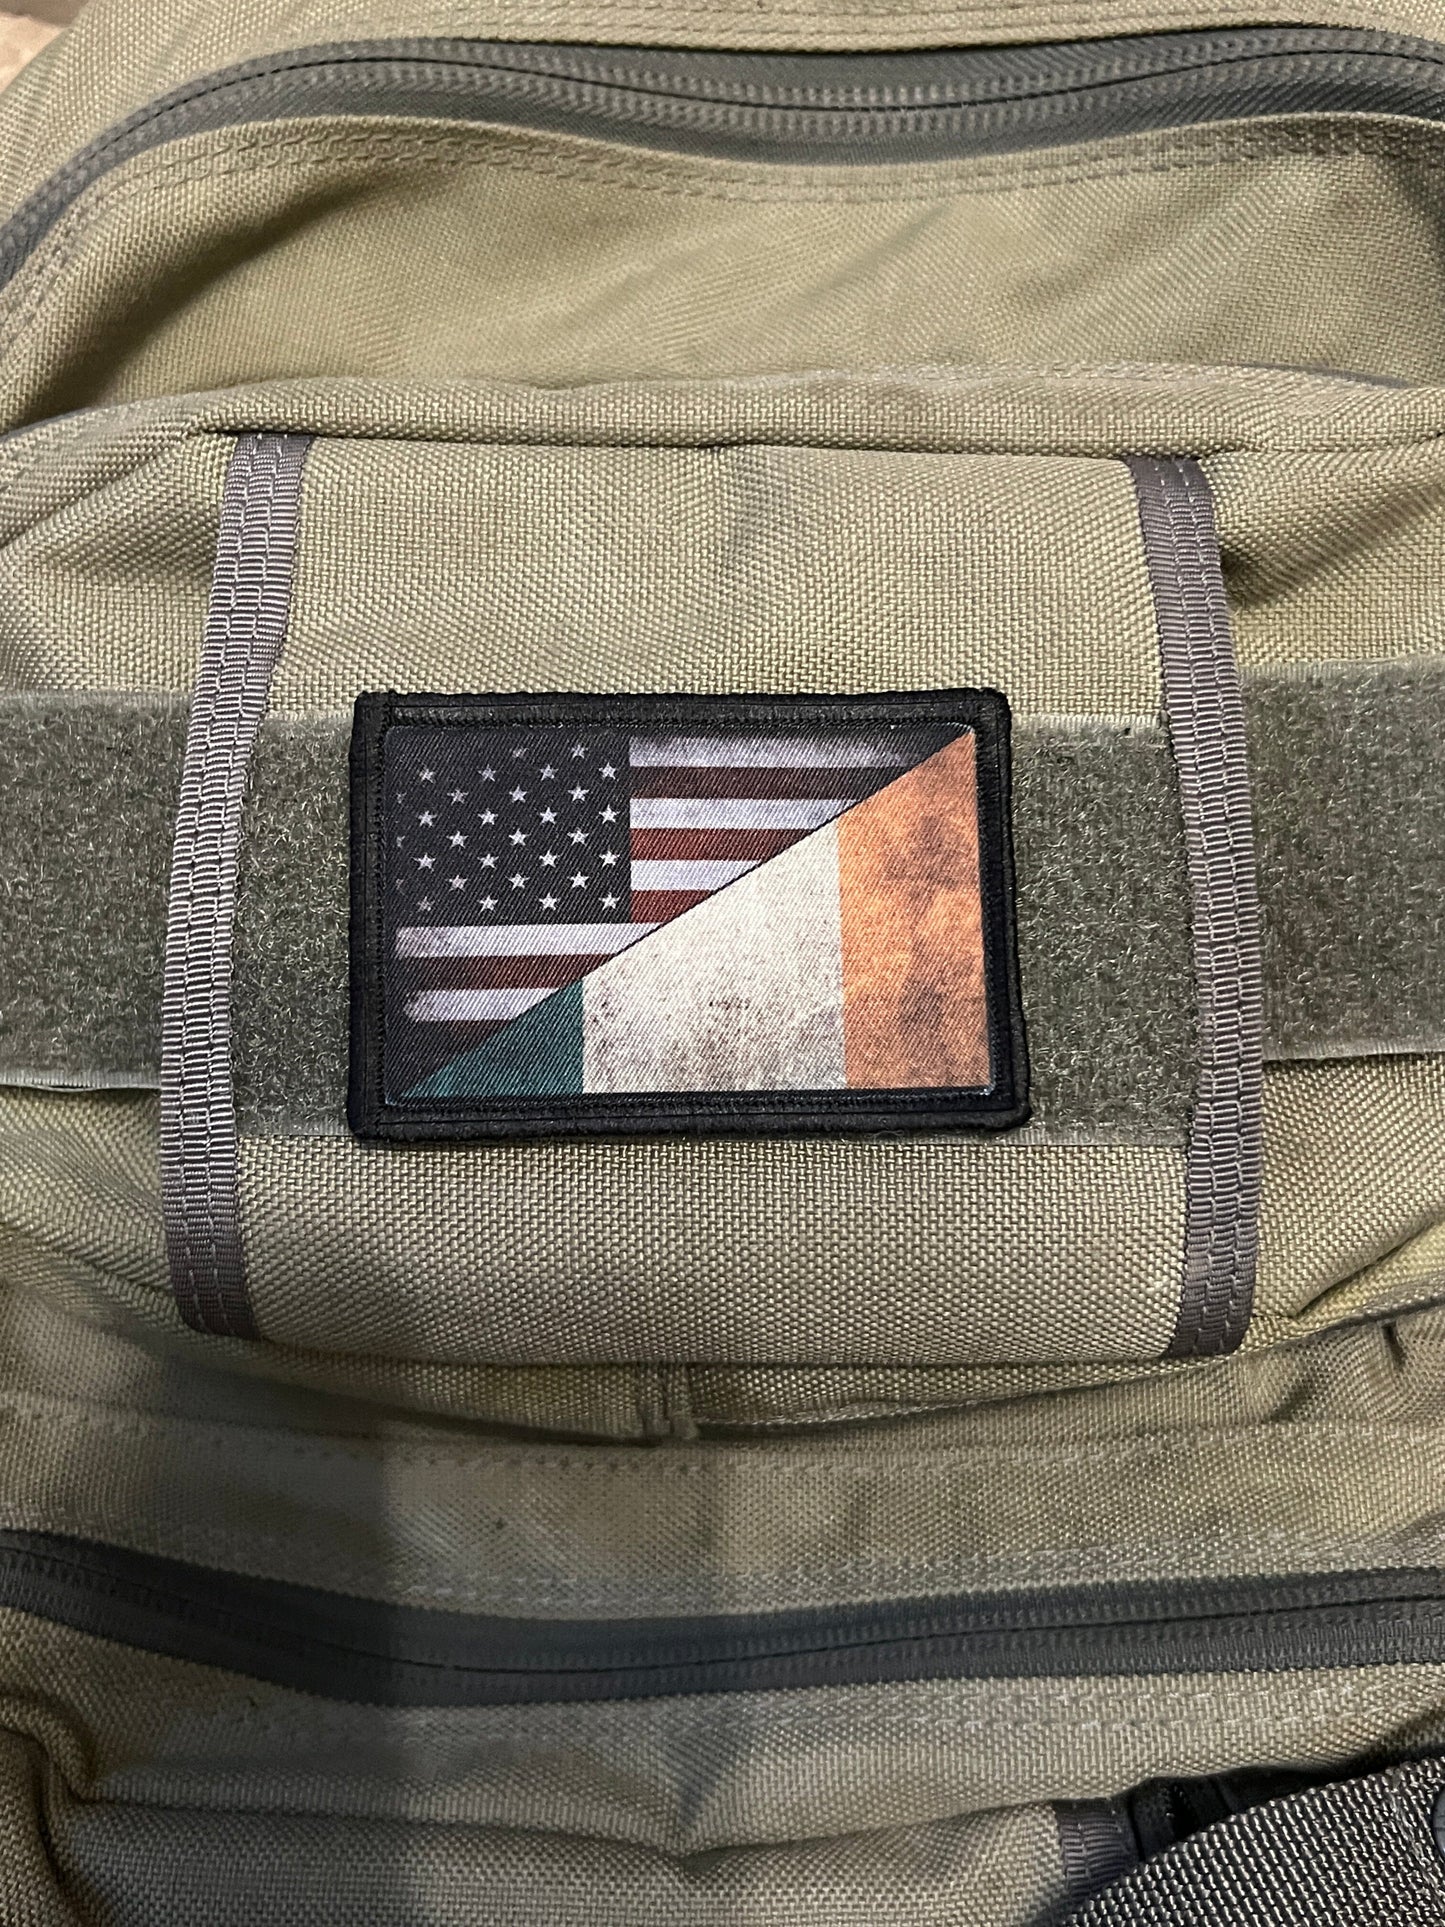 Irish Ireland USA Flag Velcro Morale patch tactical velcro patches velcro patches tactical morale patches velcro